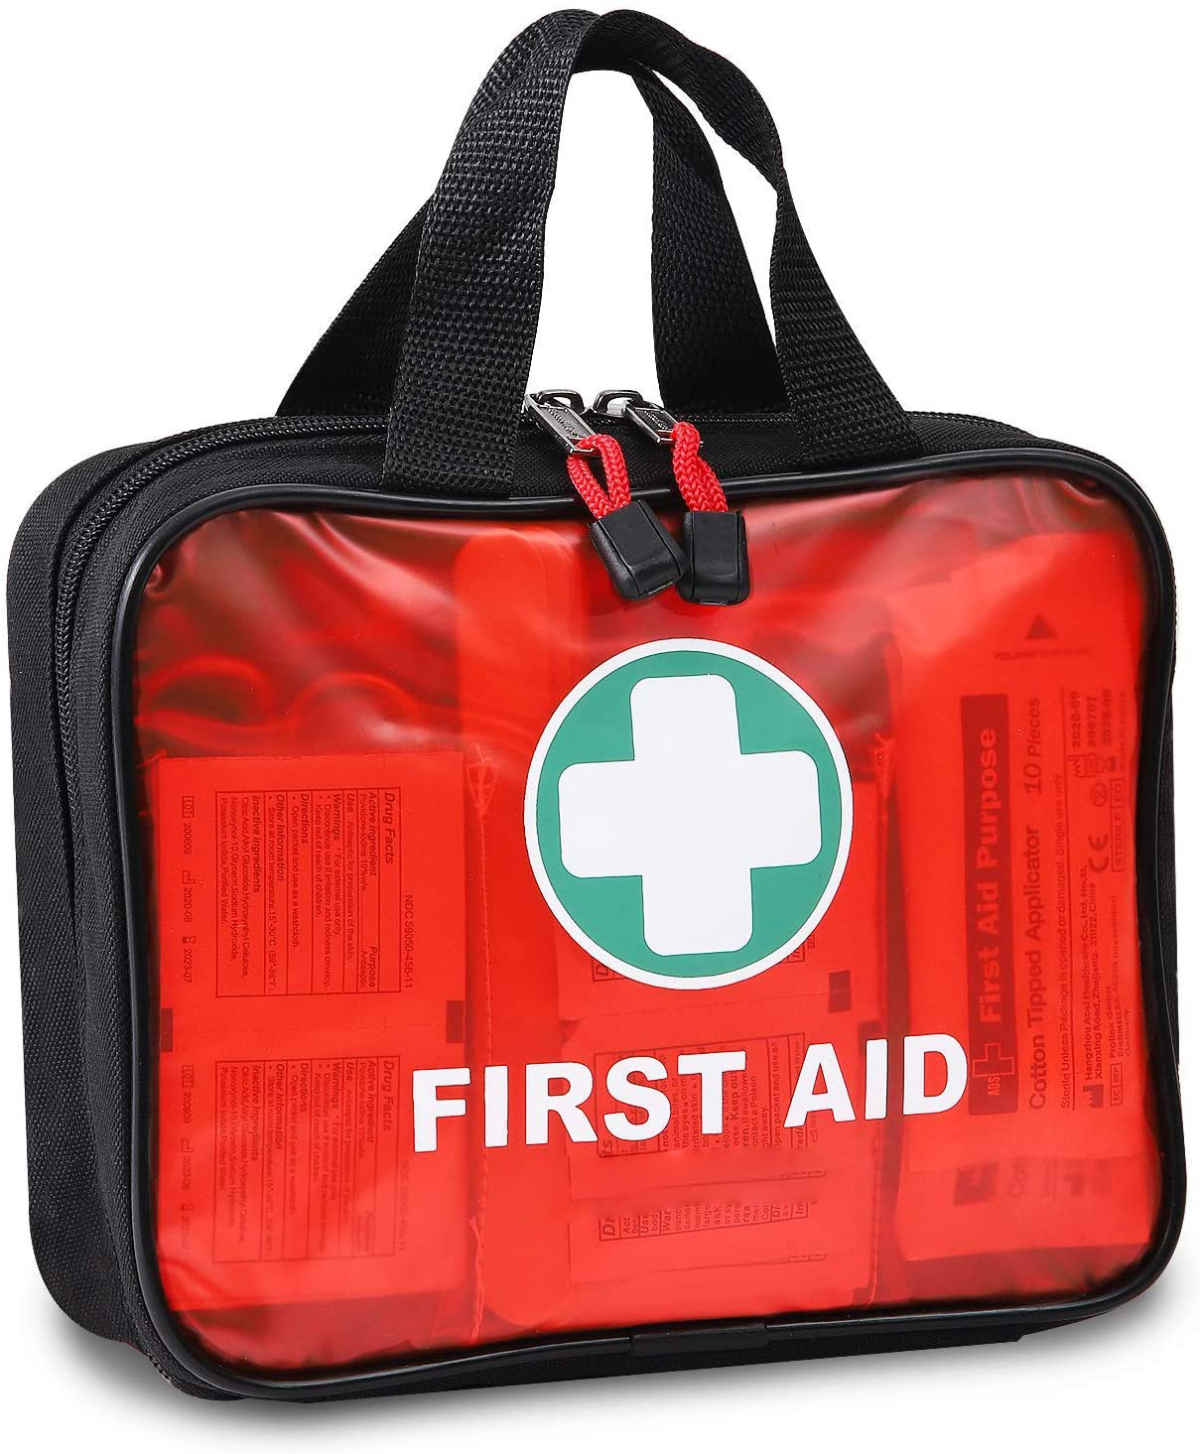 Red First Aid Handbag with 200 Piece Hospital Grade Medical Supplies